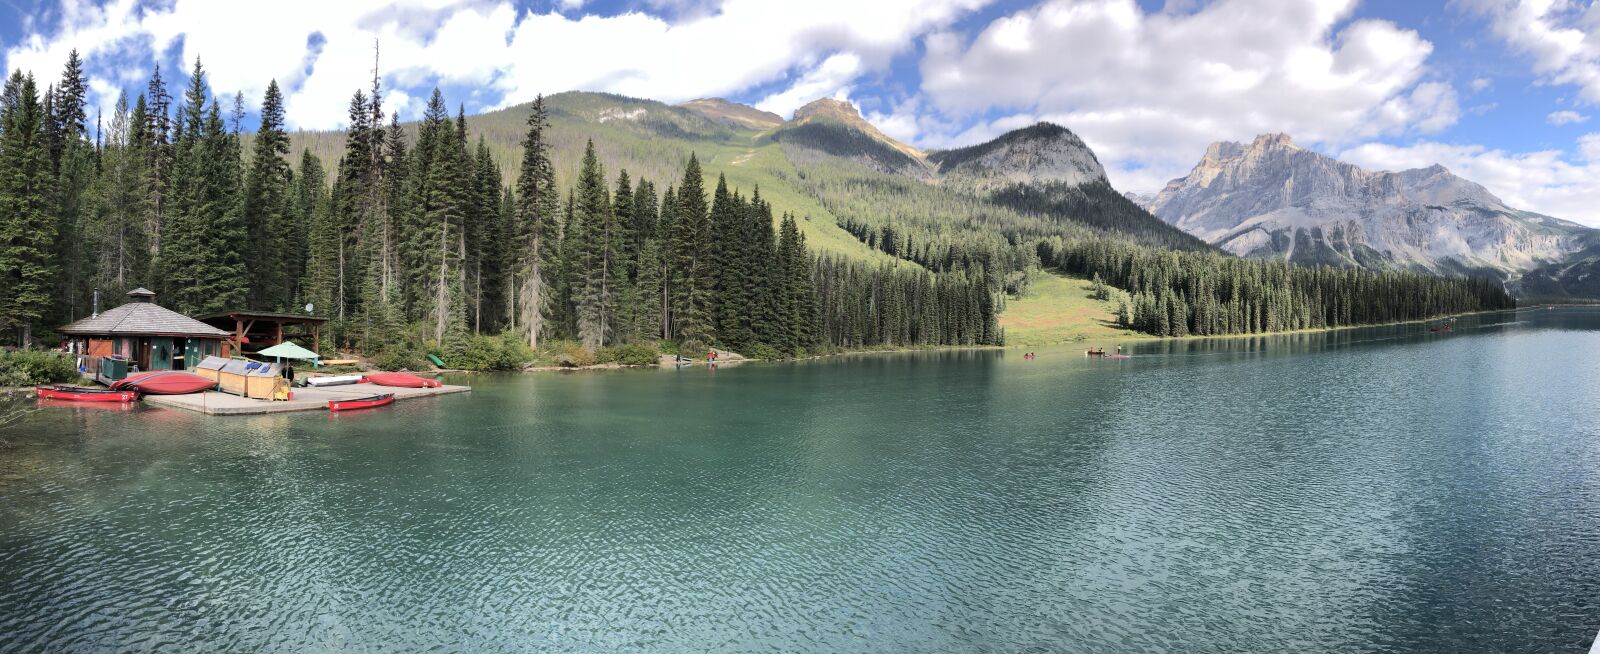 iPhone X back camera 4mm f/1.8 sample photo. Emerald lake, bc, canada photography